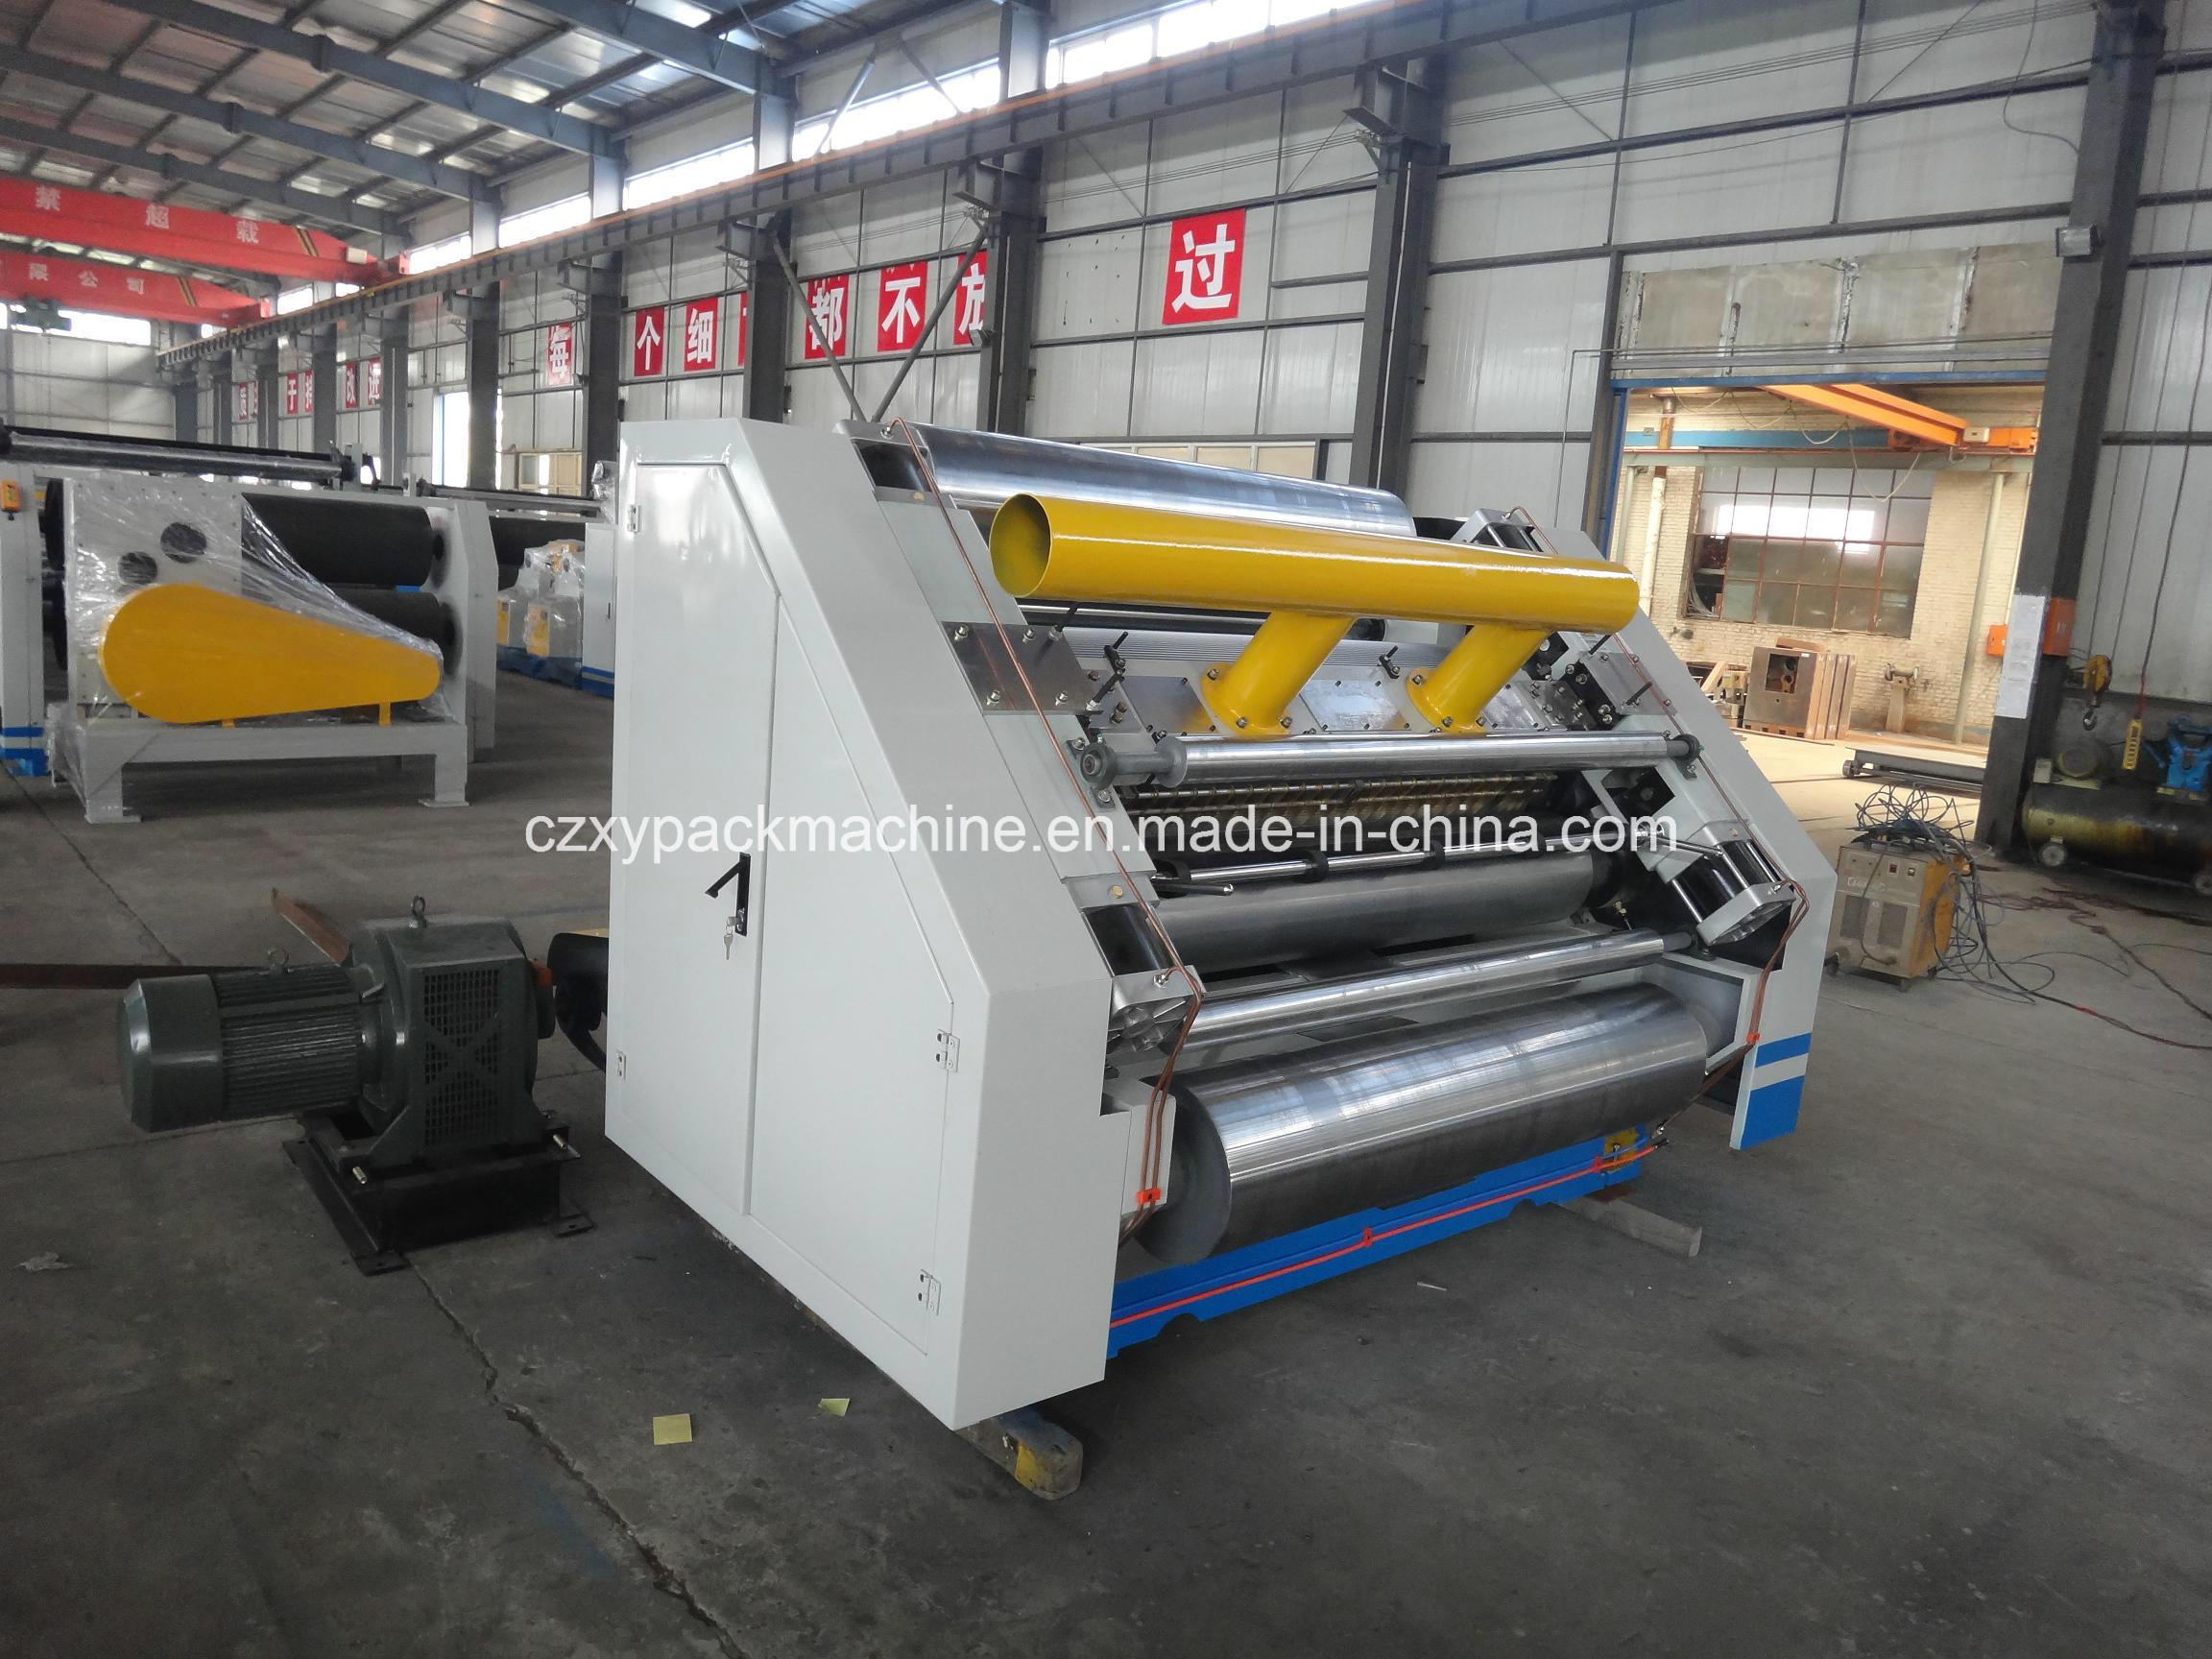 China Supplier Single Face Corrugated Paper Making Machine